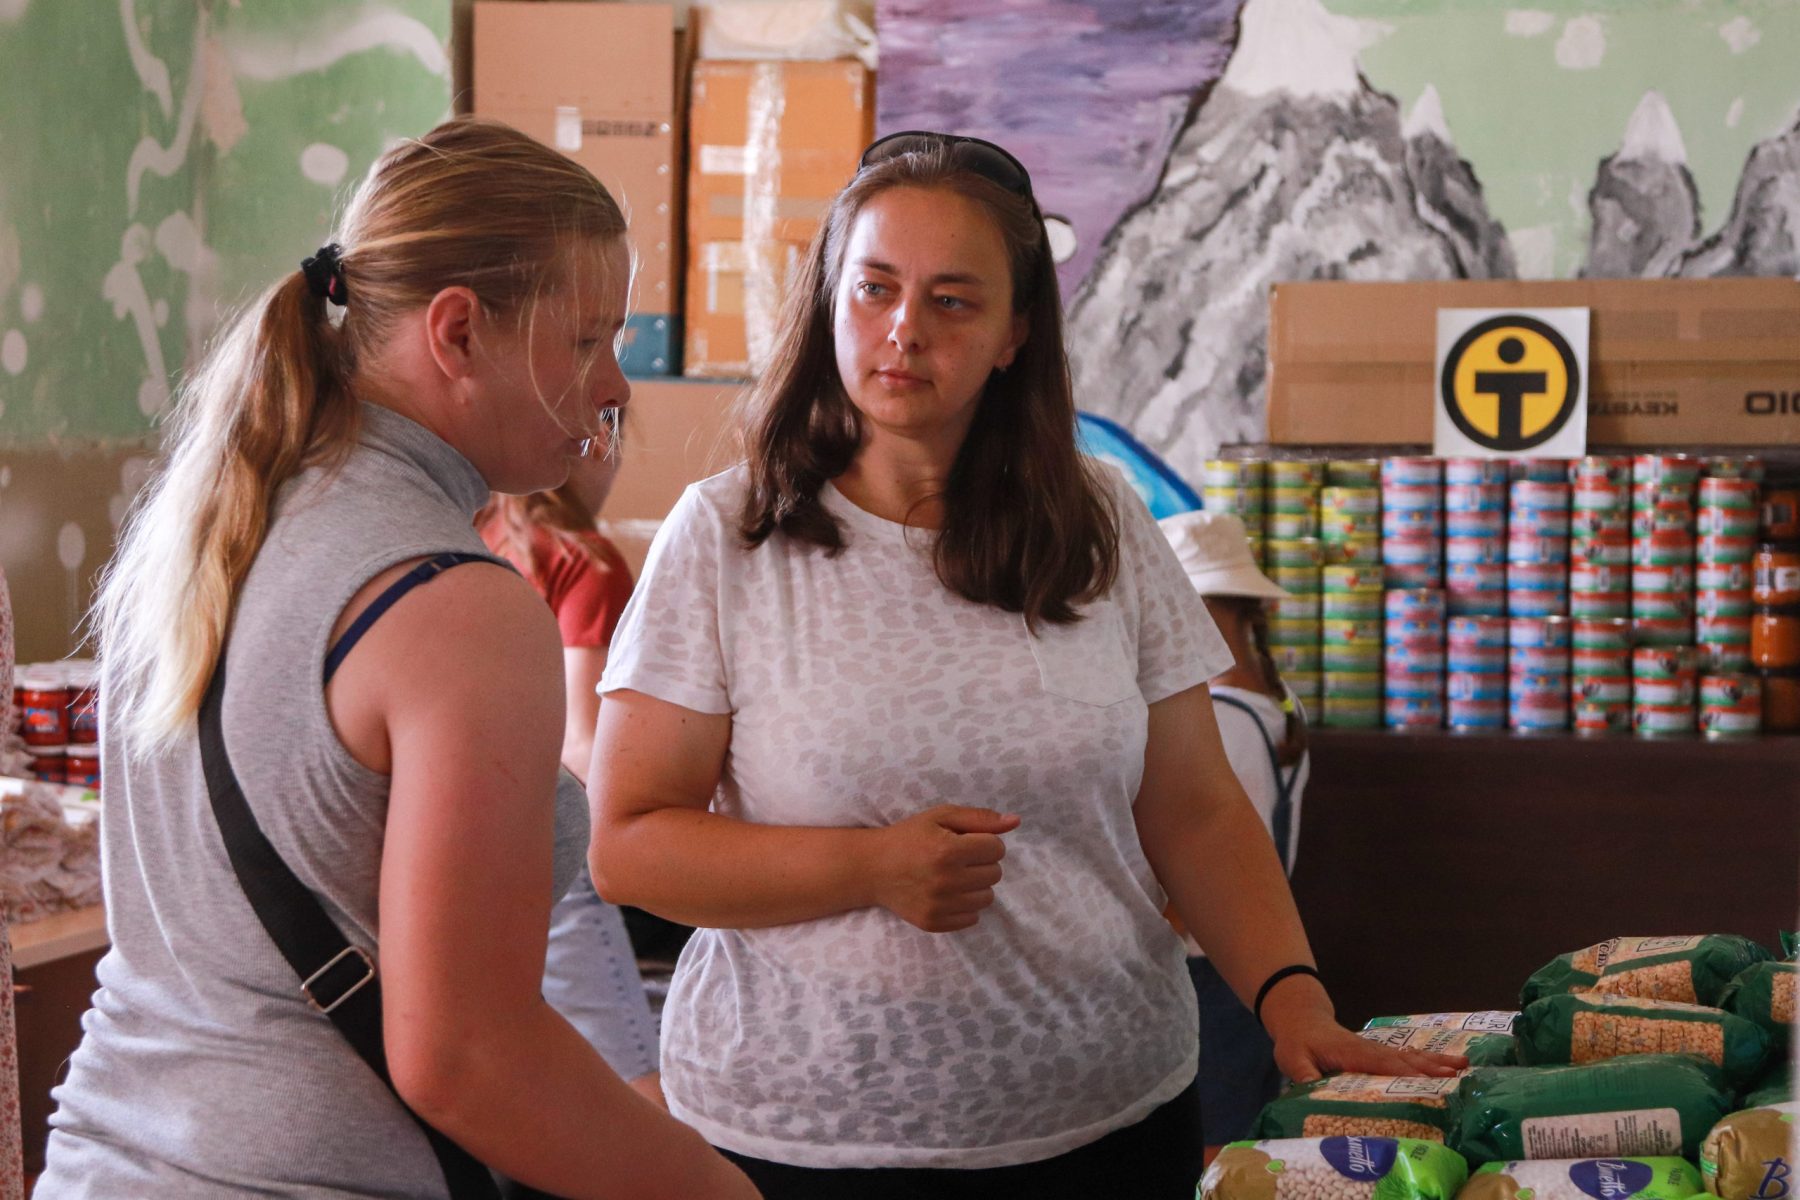 Food distribution in Balti, Moldova through our partner Friends of Moldova.